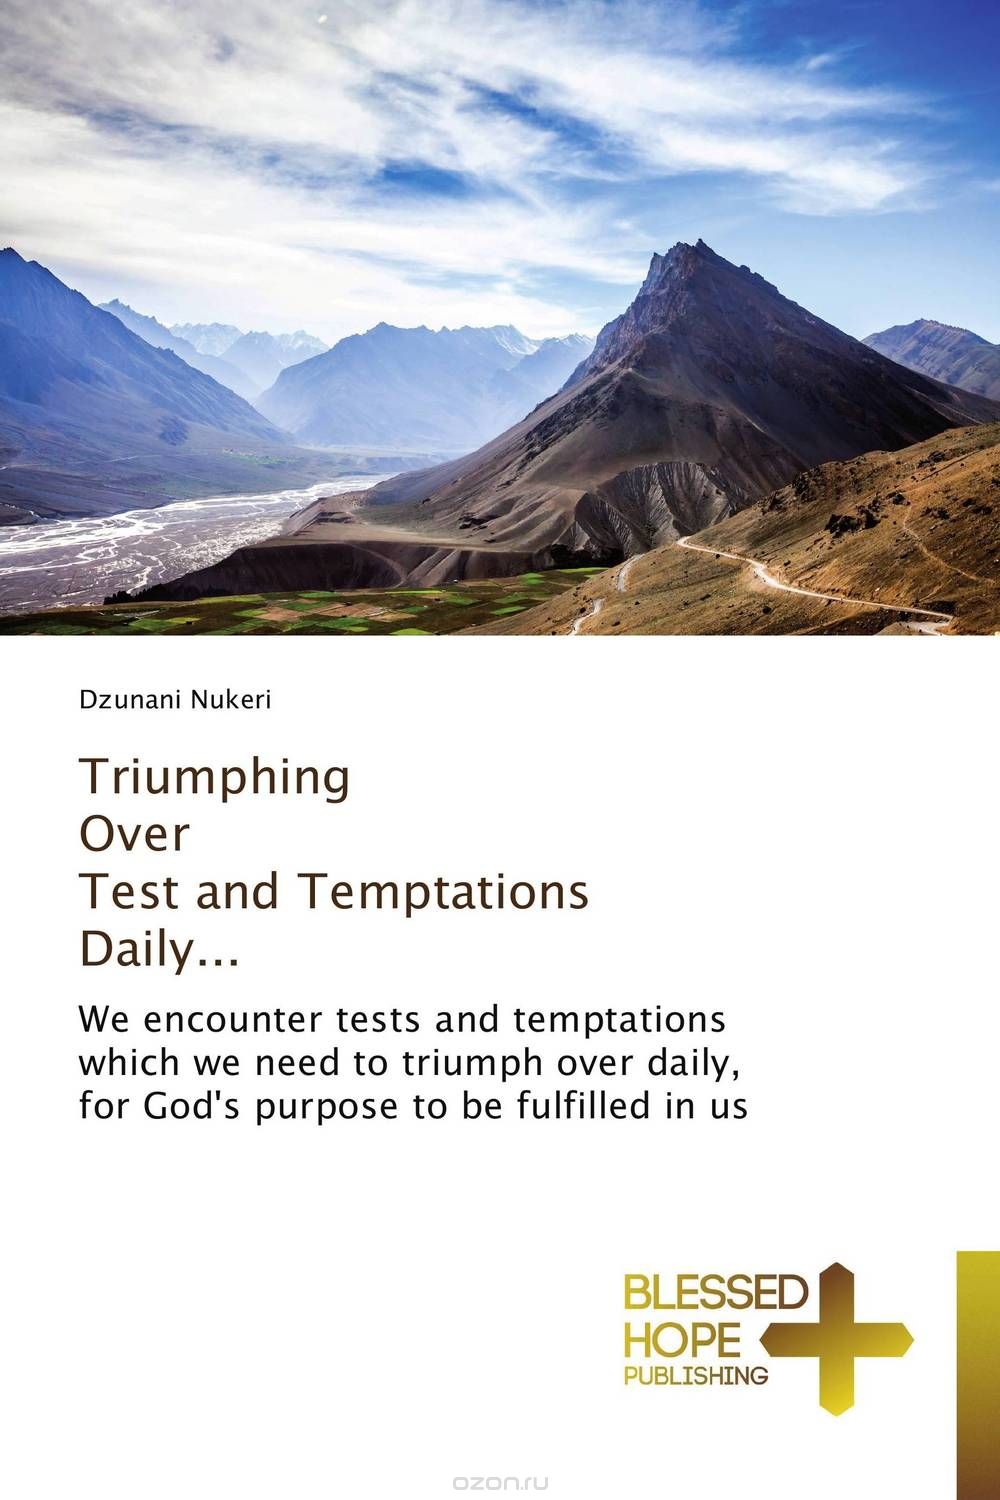 Скачать книгу "Triumphing Over Test and Temptations Daily..."